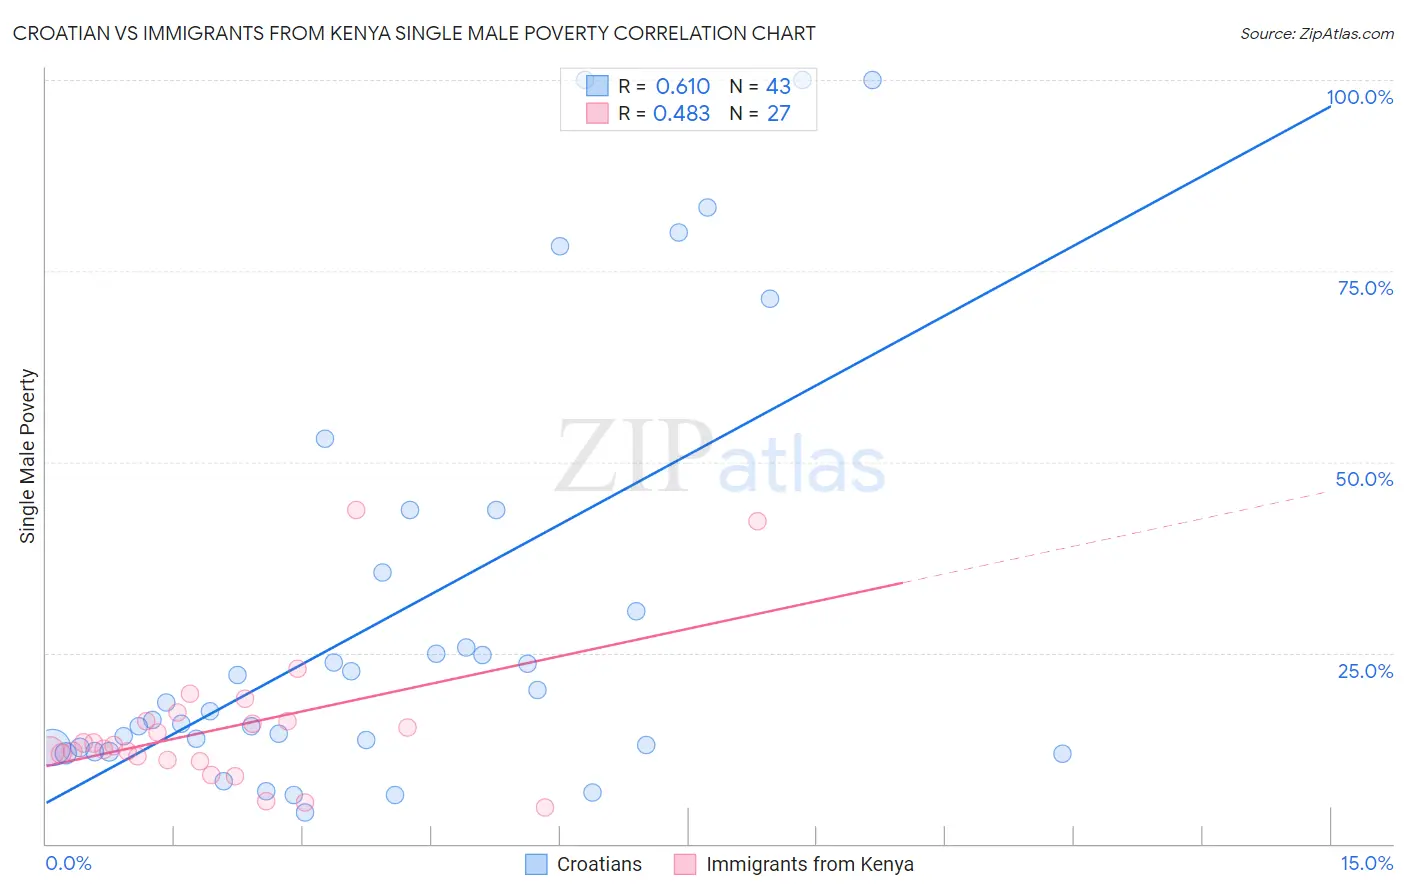 Croatian vs Immigrants from Kenya Single Male Poverty